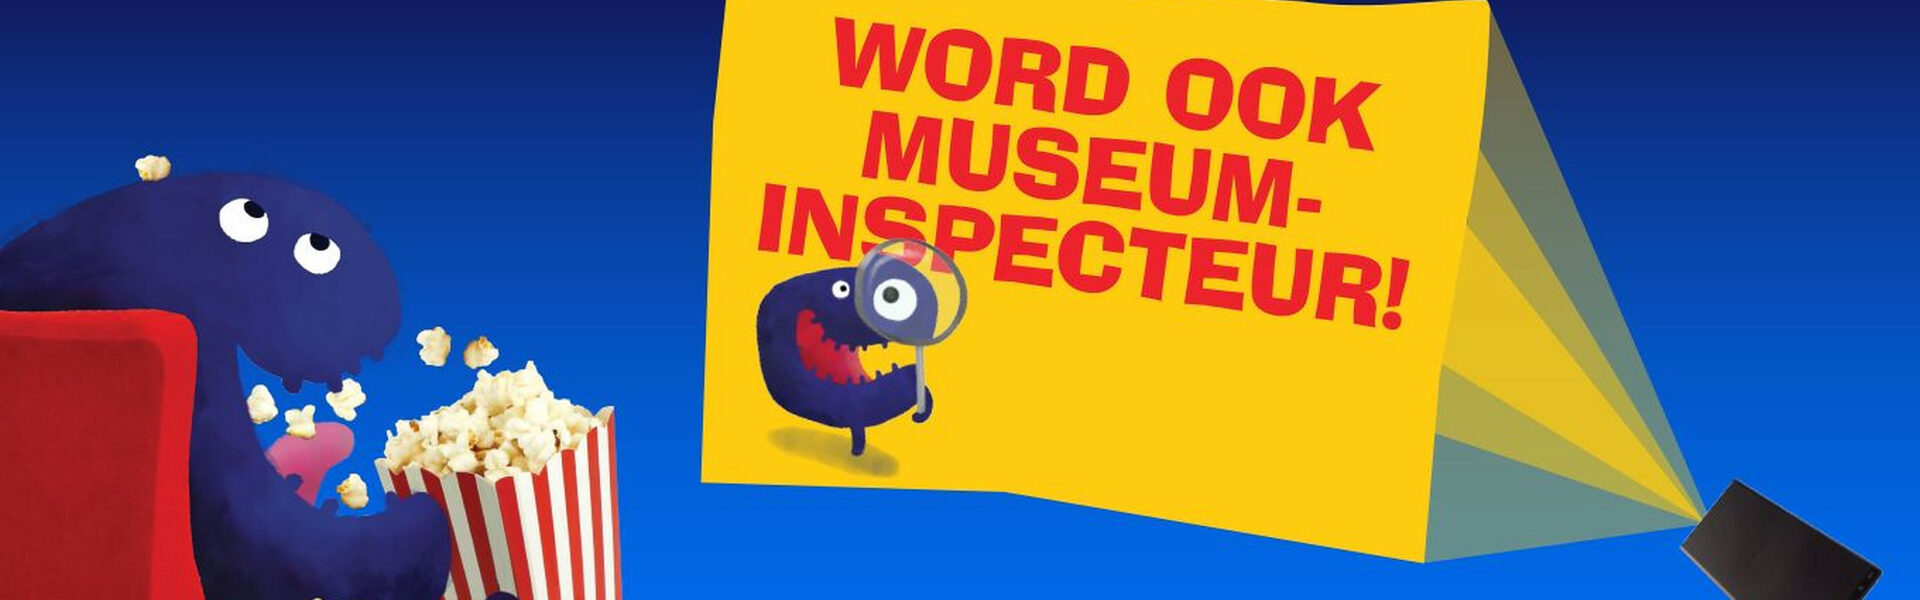 Word Museuminspecteur